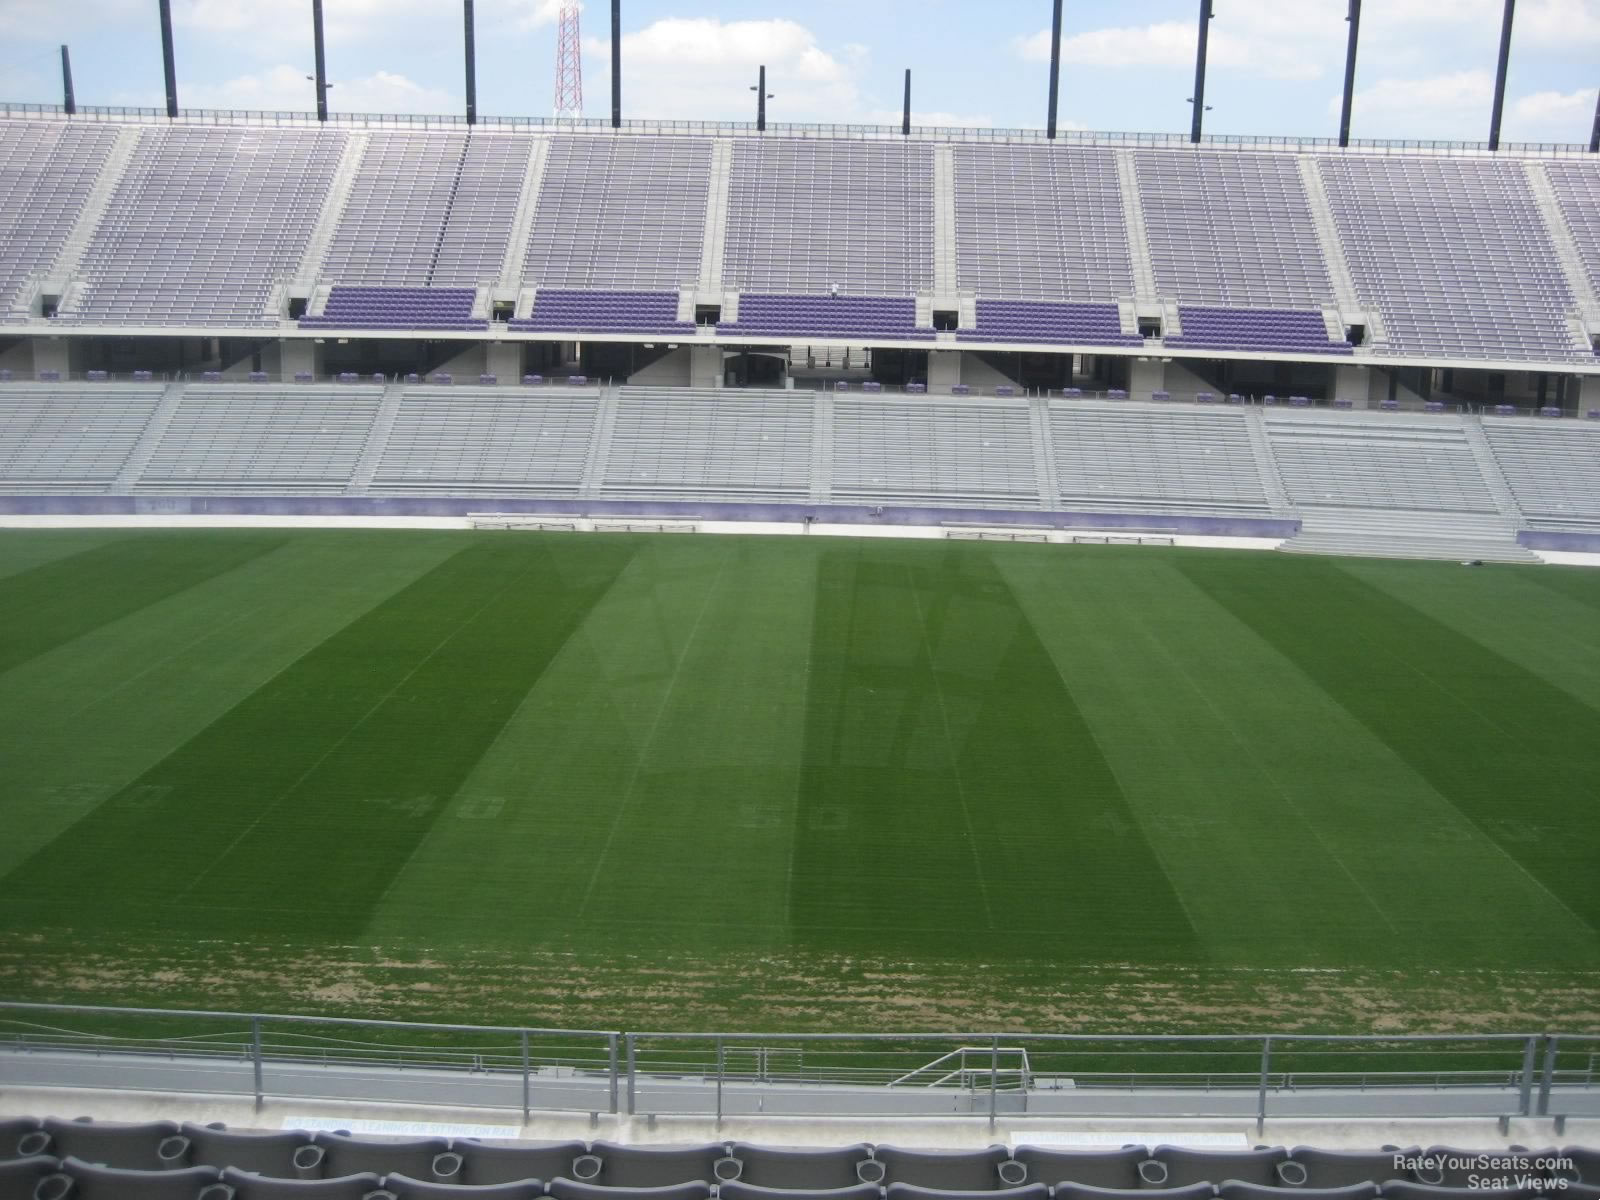 section 207, row h seat view  - amon carter stadium